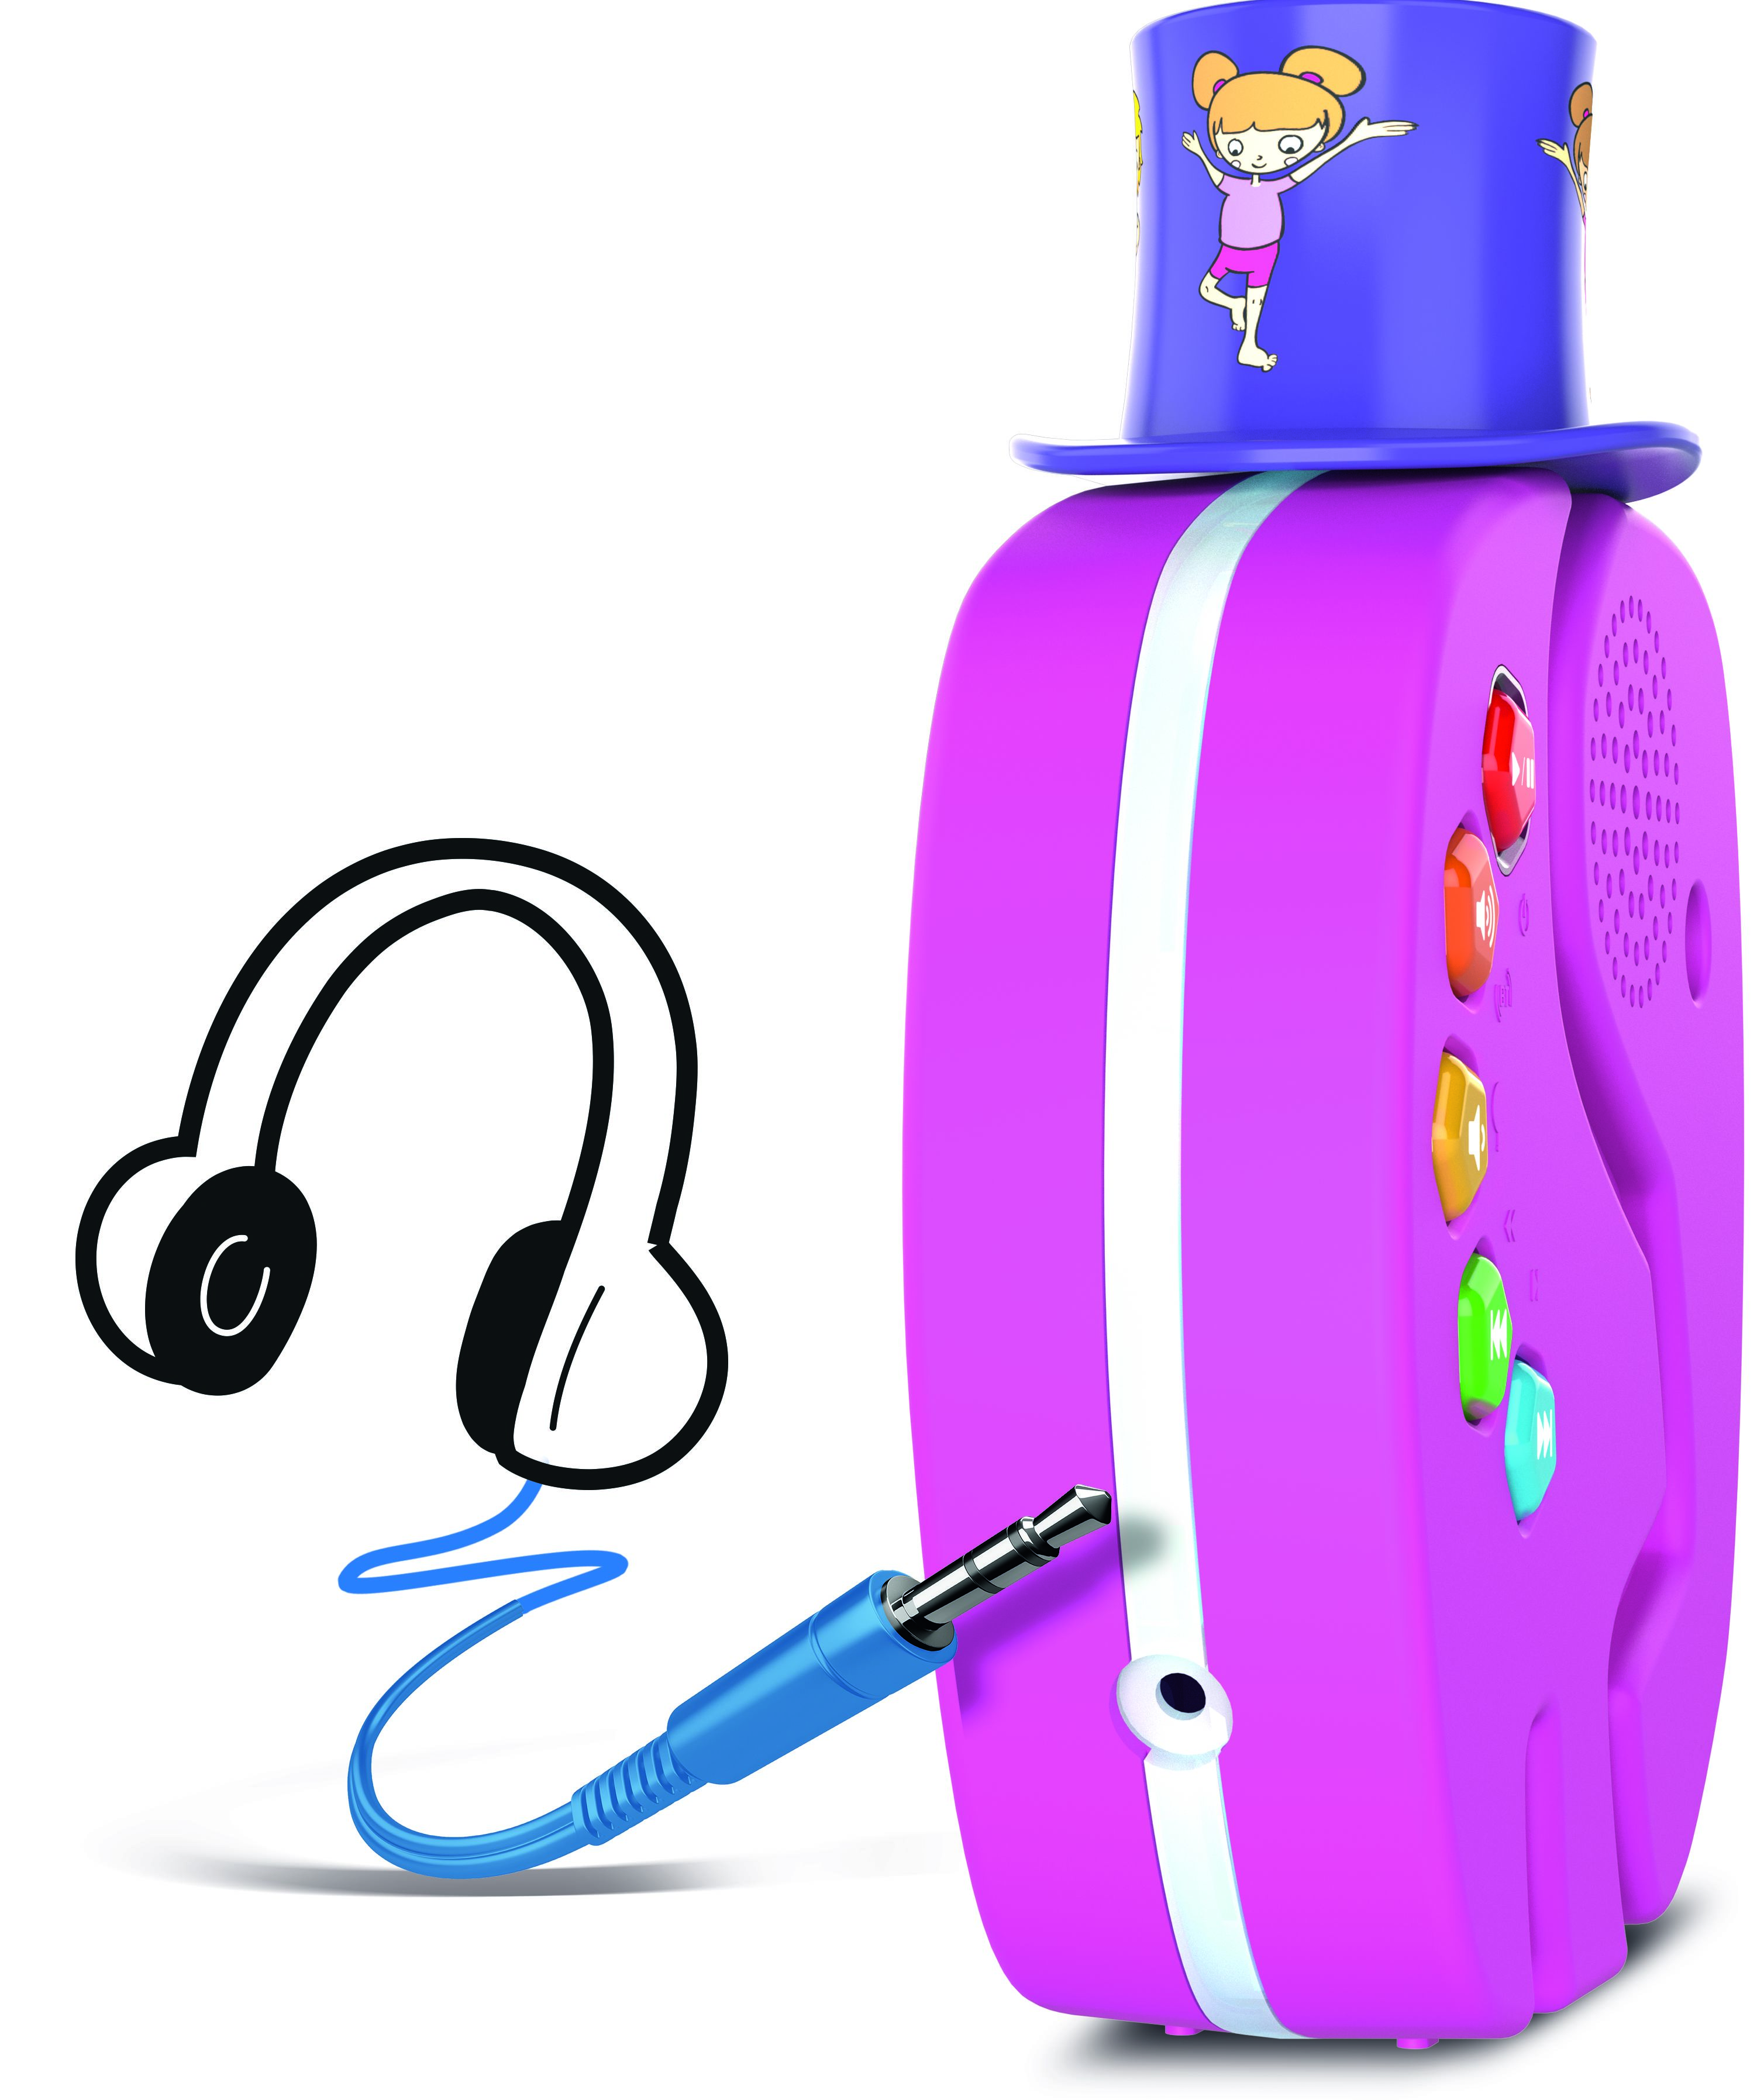 TECHNISAT TECHNIFANT Audioplayer Kinder für TECHNIFANT-Look, im Pink